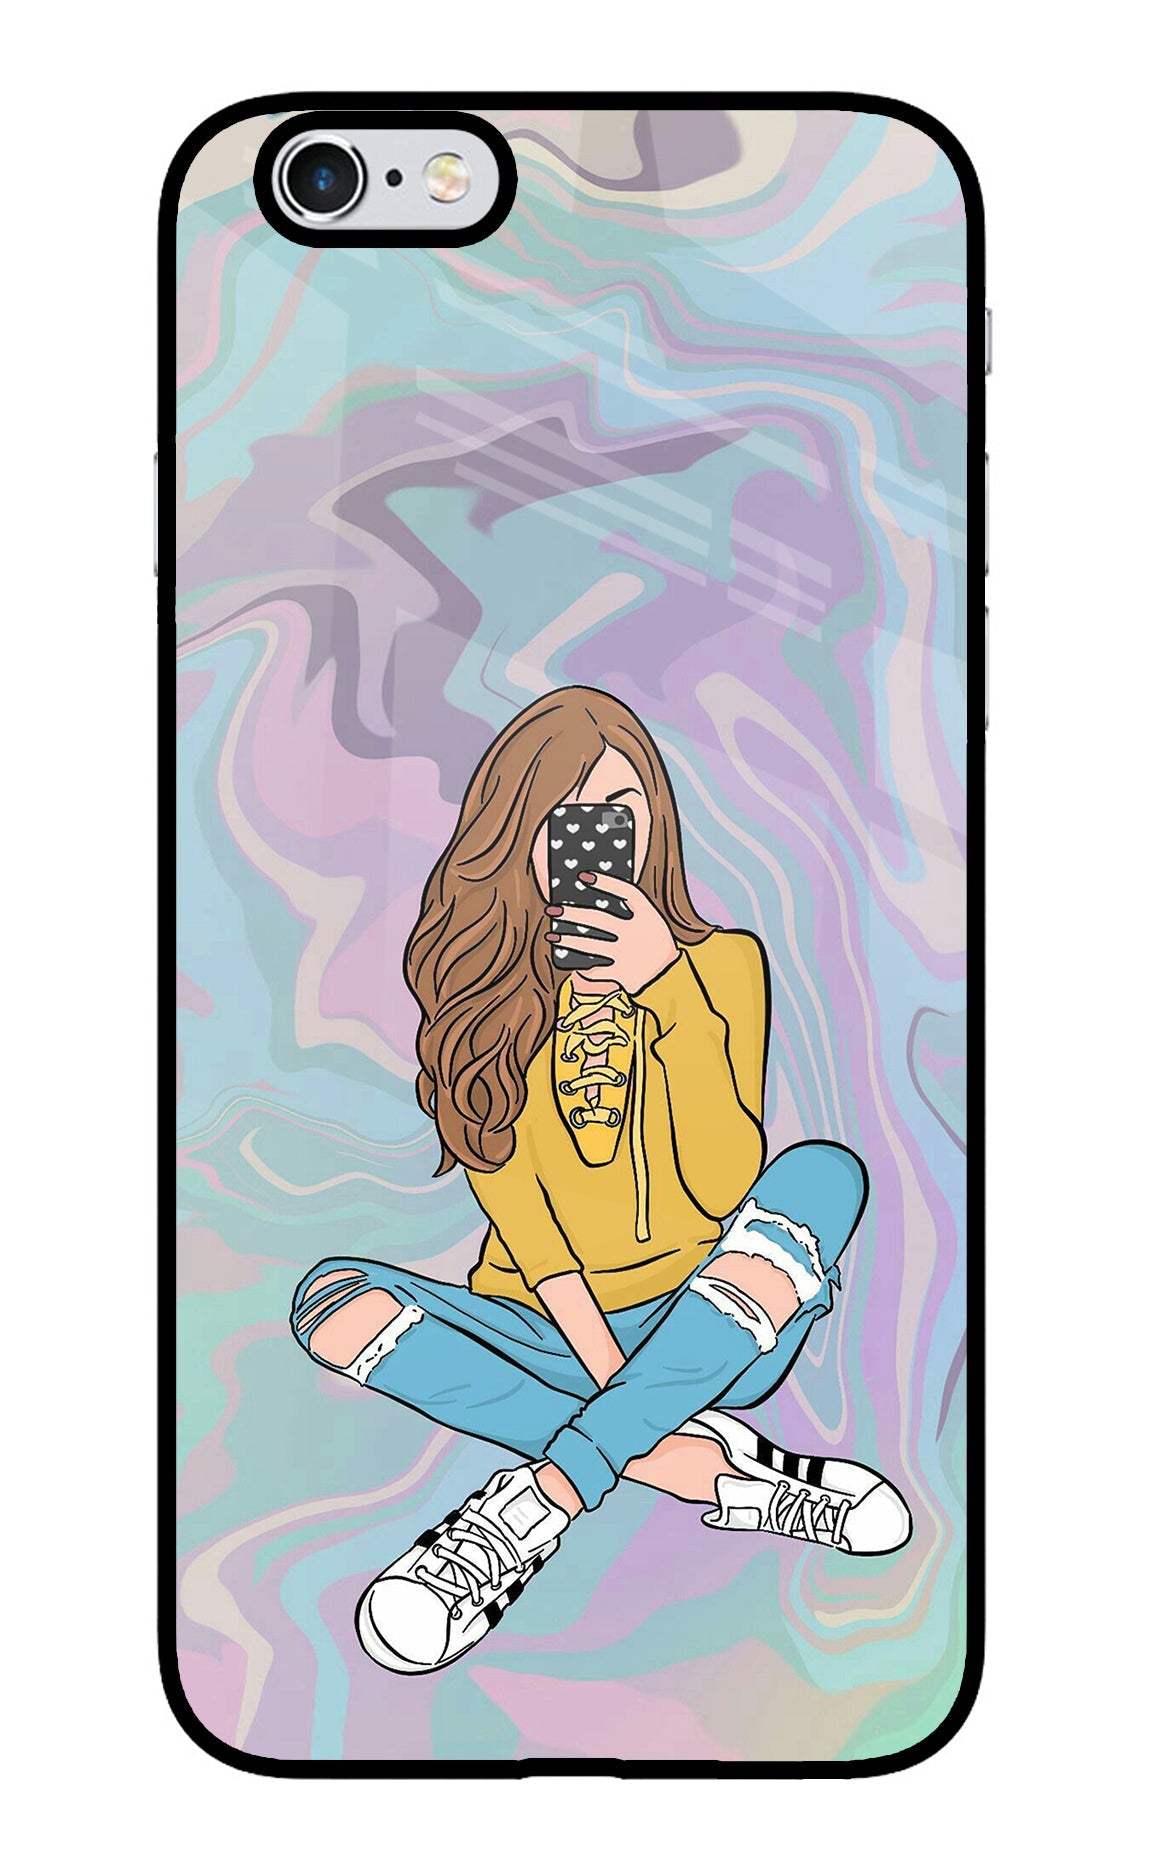 Selfie Girl iPhone 6/6s Glass Case